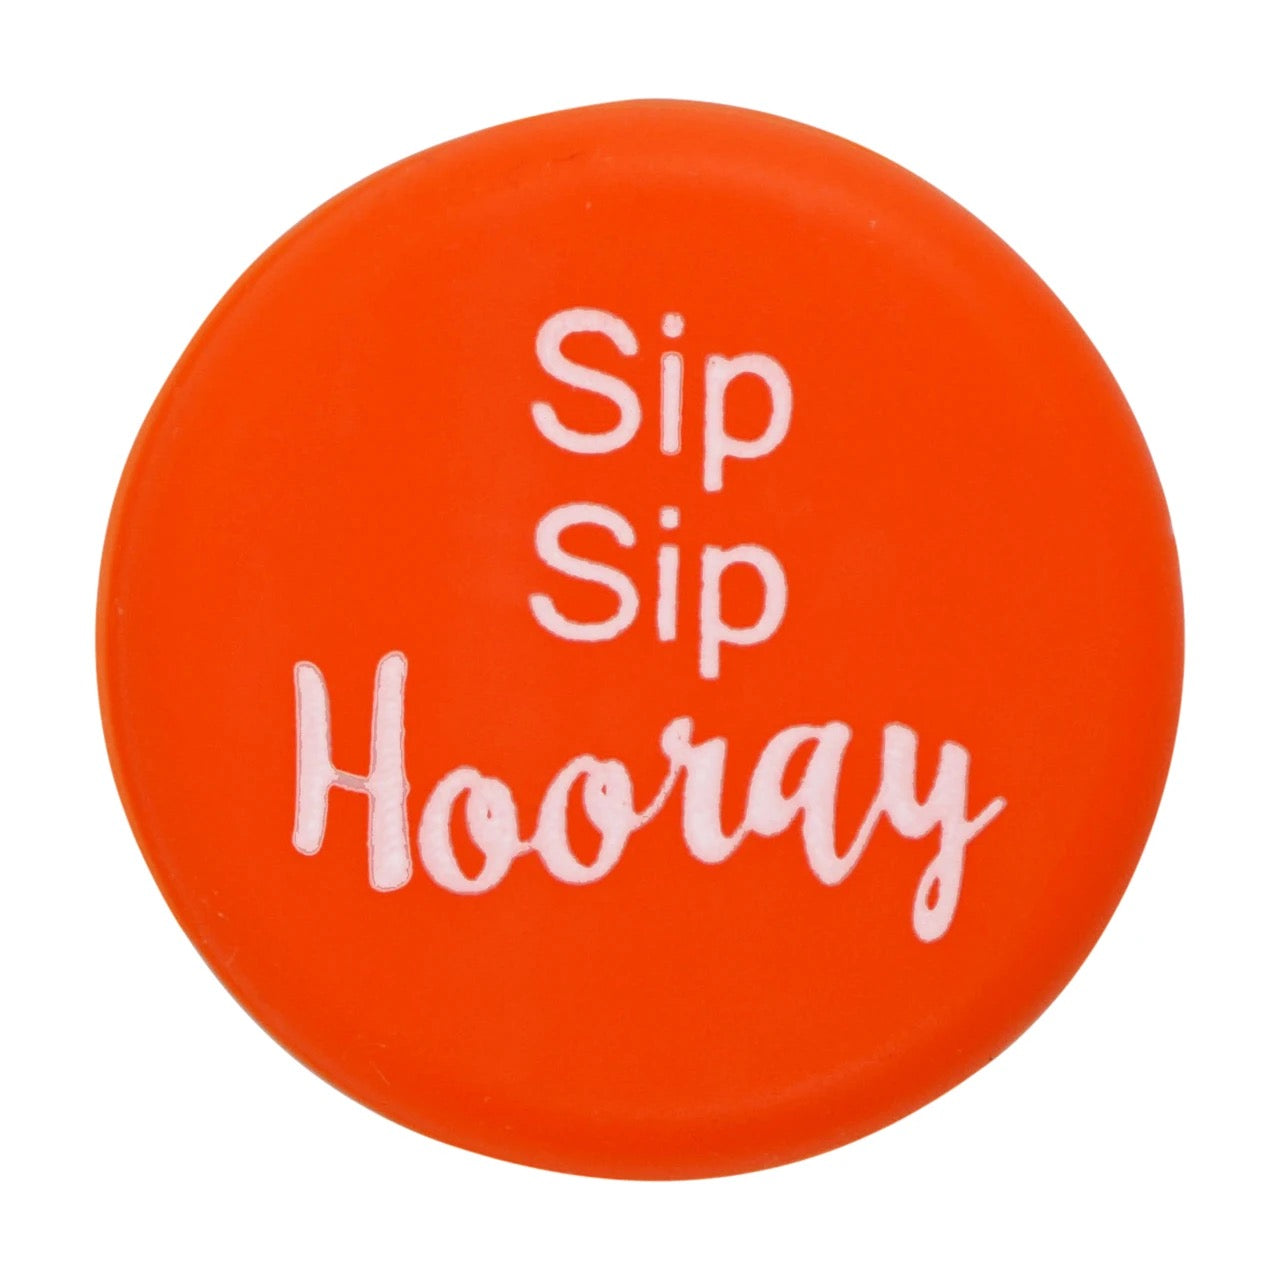 Sip Sip Hooray - Wine Cap  Capabunga   